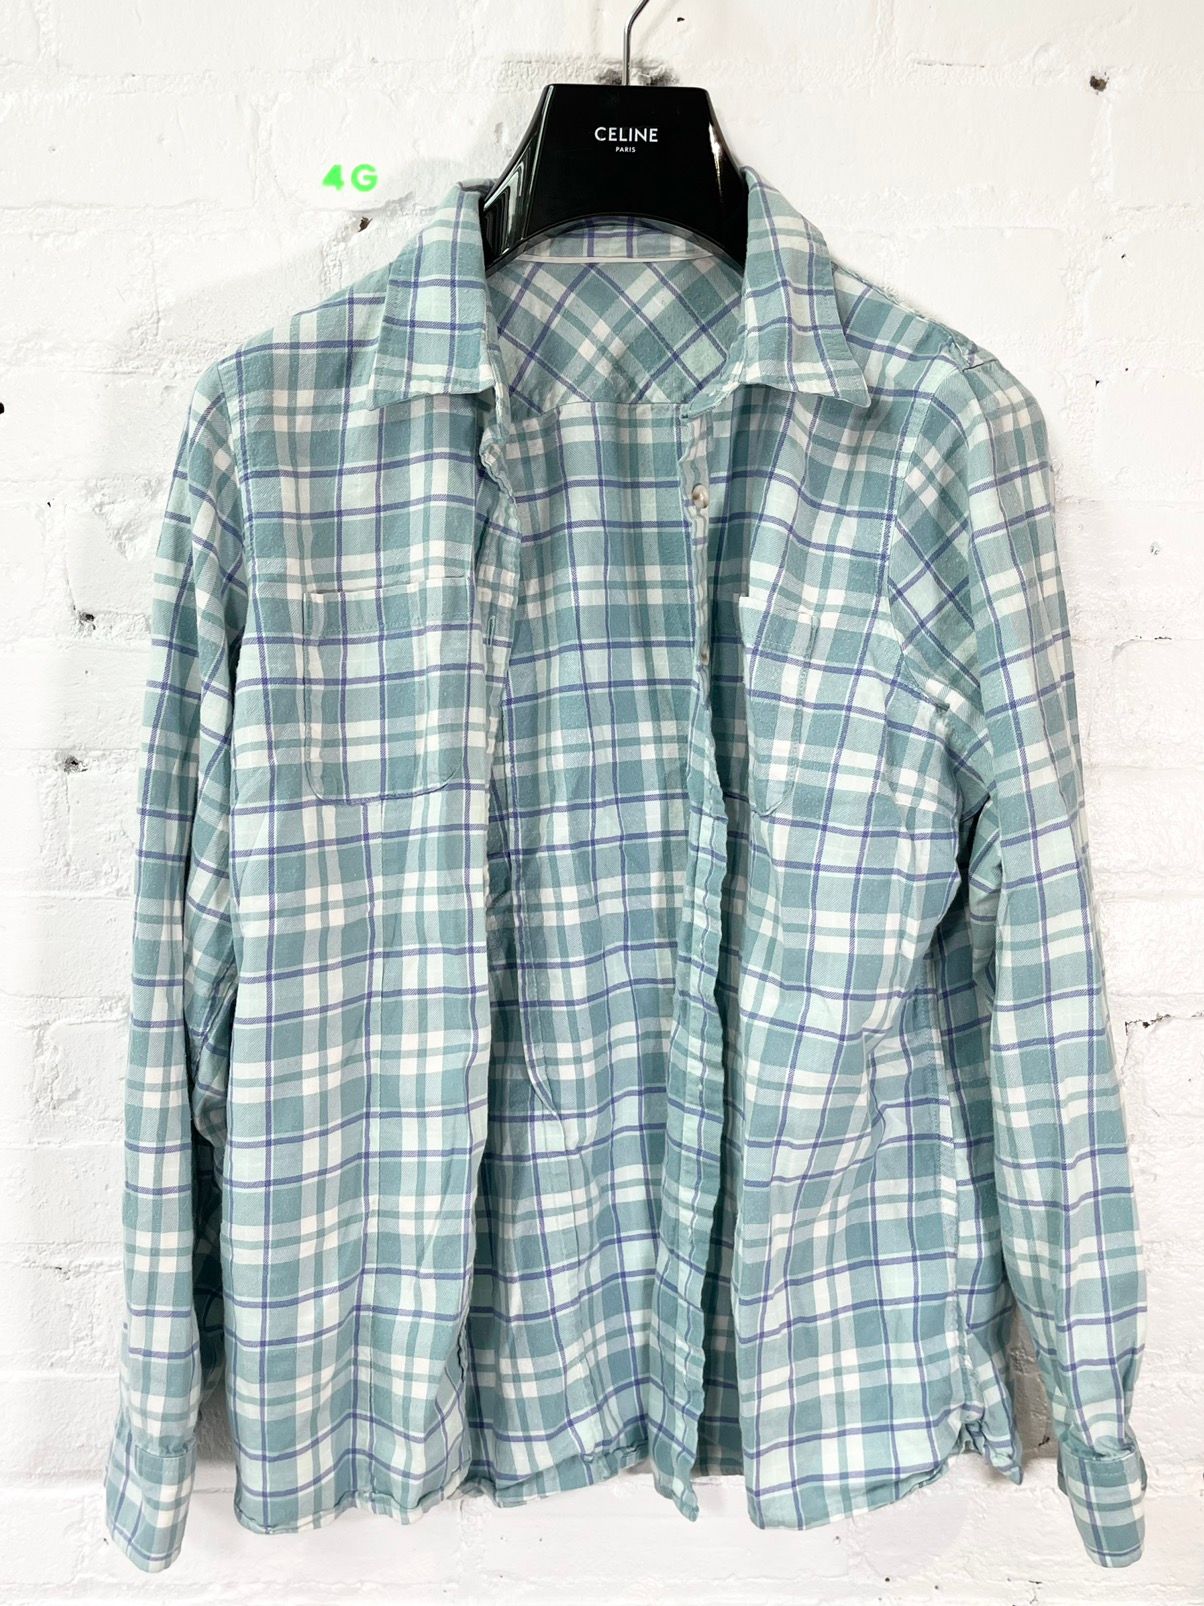 Vintage Checkered Plaid Blue Button Up Grunge Shirt